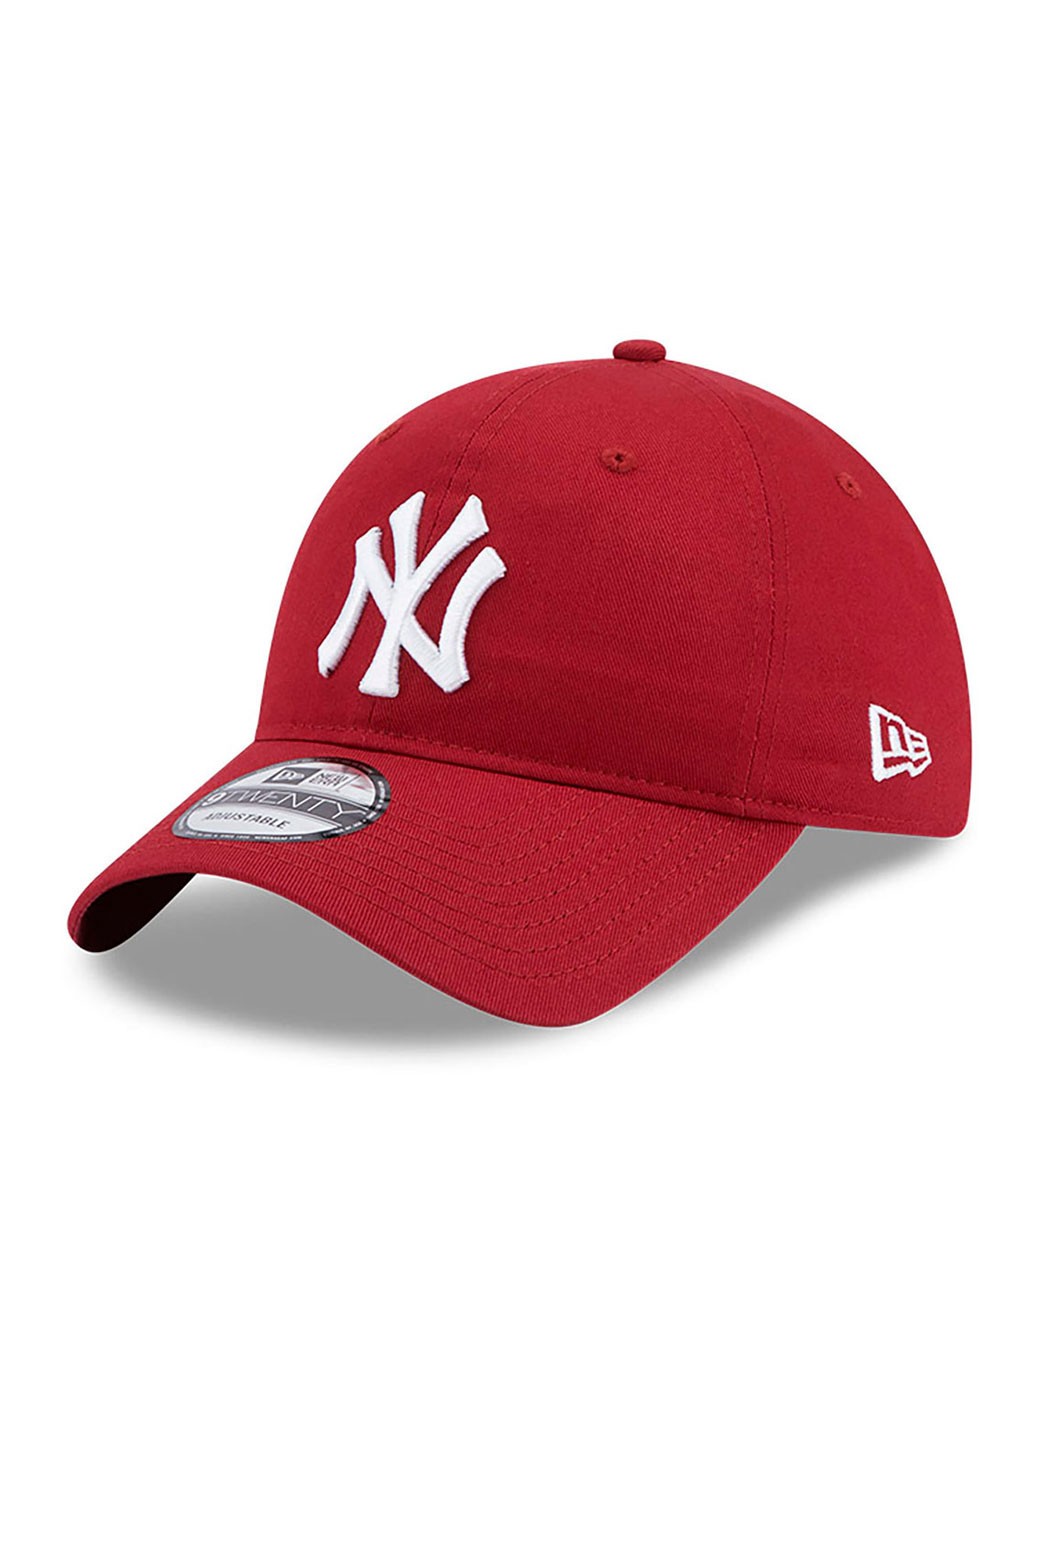 Gorra New Era New York Yankees Rojo